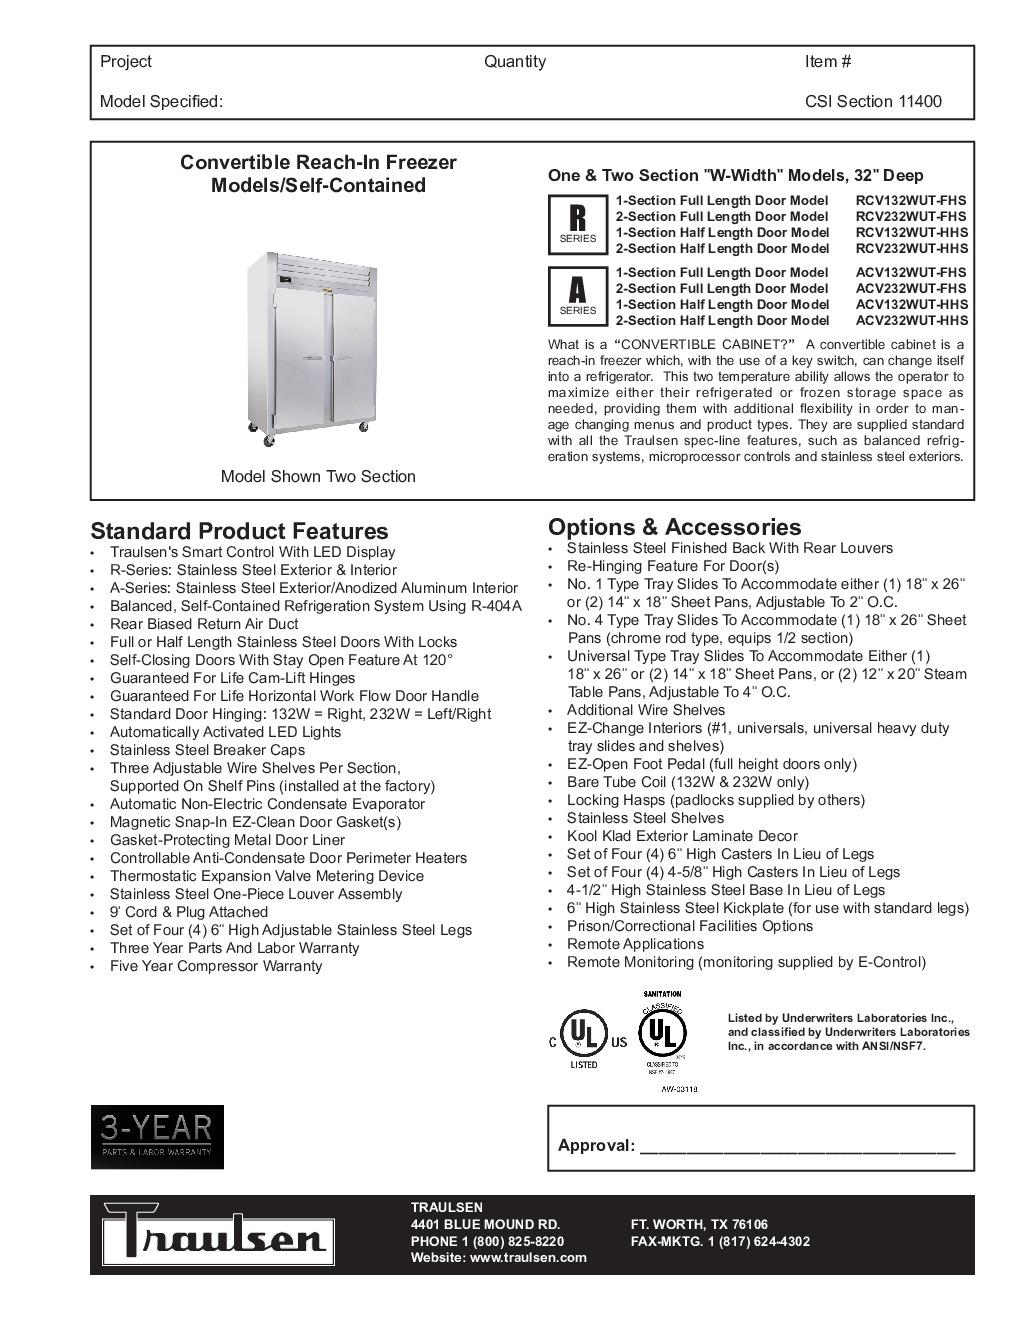 Traulsen ACV232WUT-HHS Convertible Refrigerator Freezer